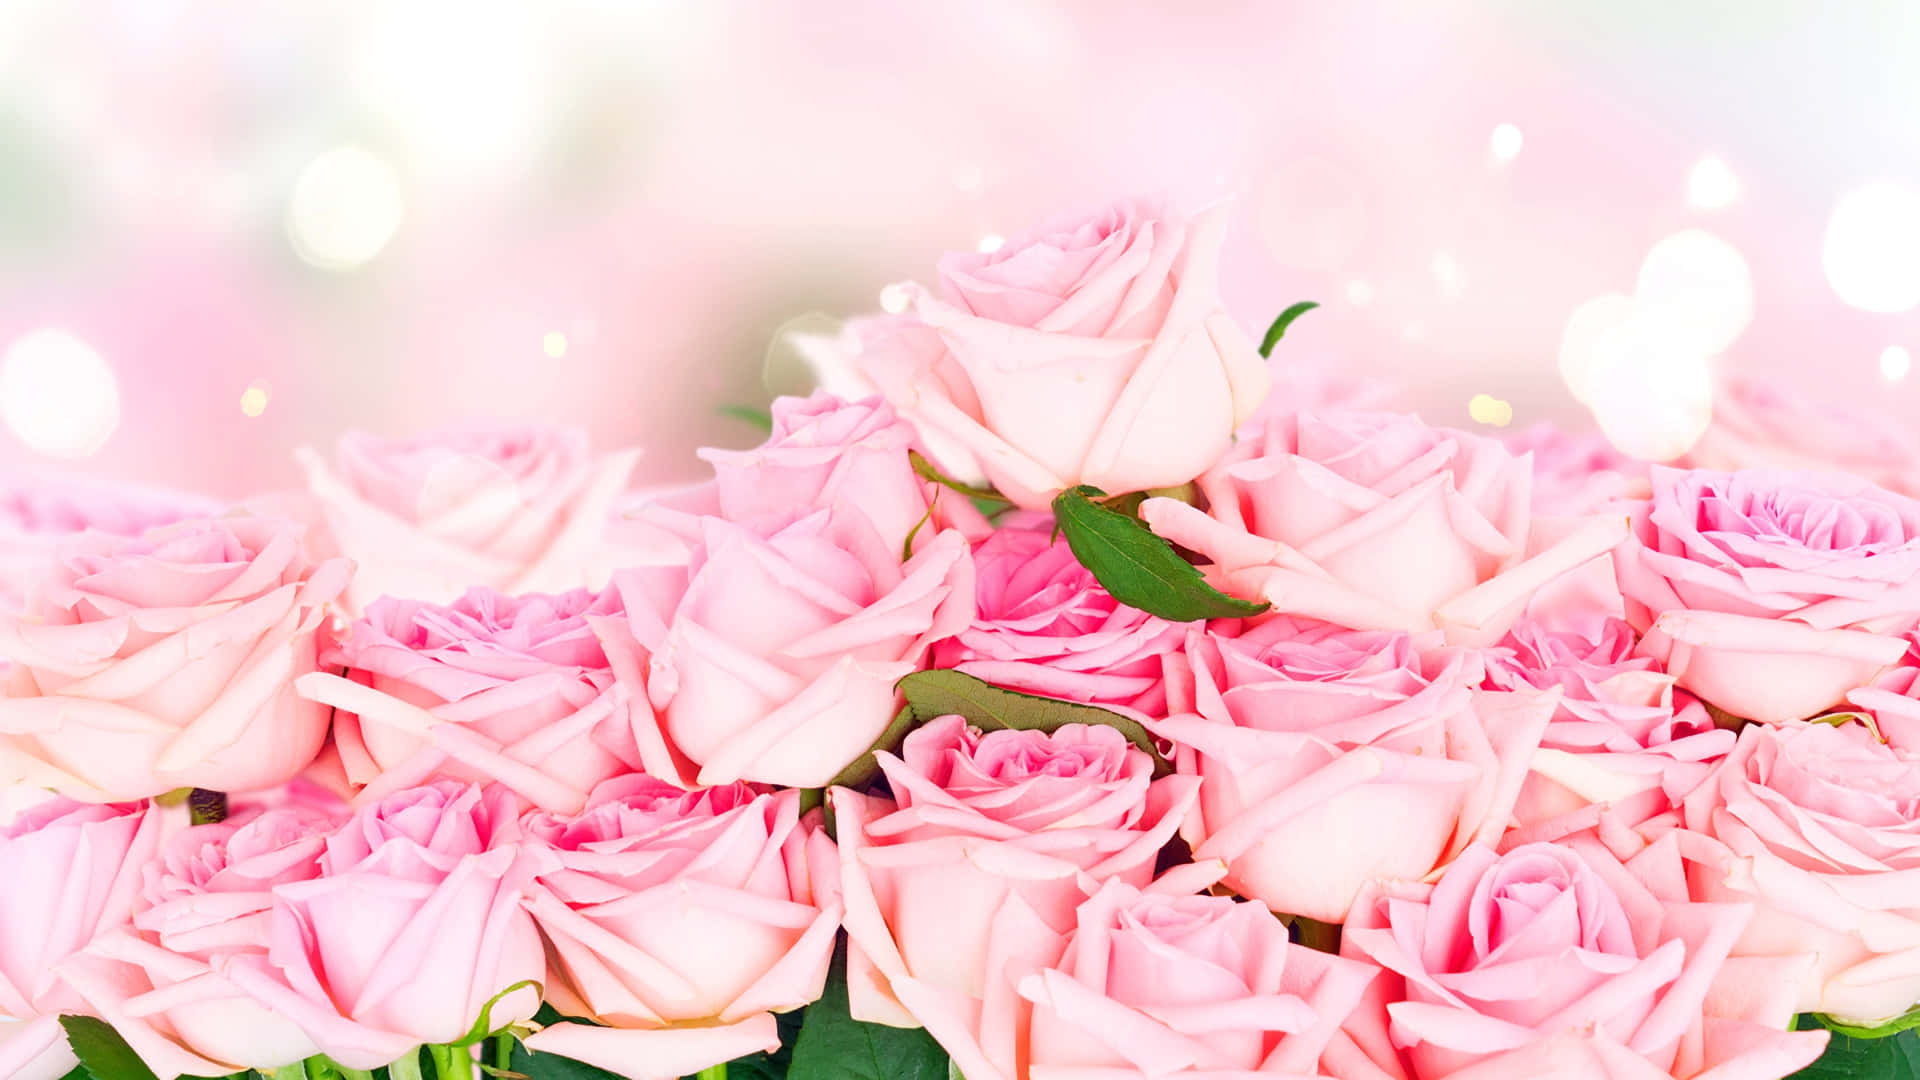 1440p Pink Roses Digital Art Background